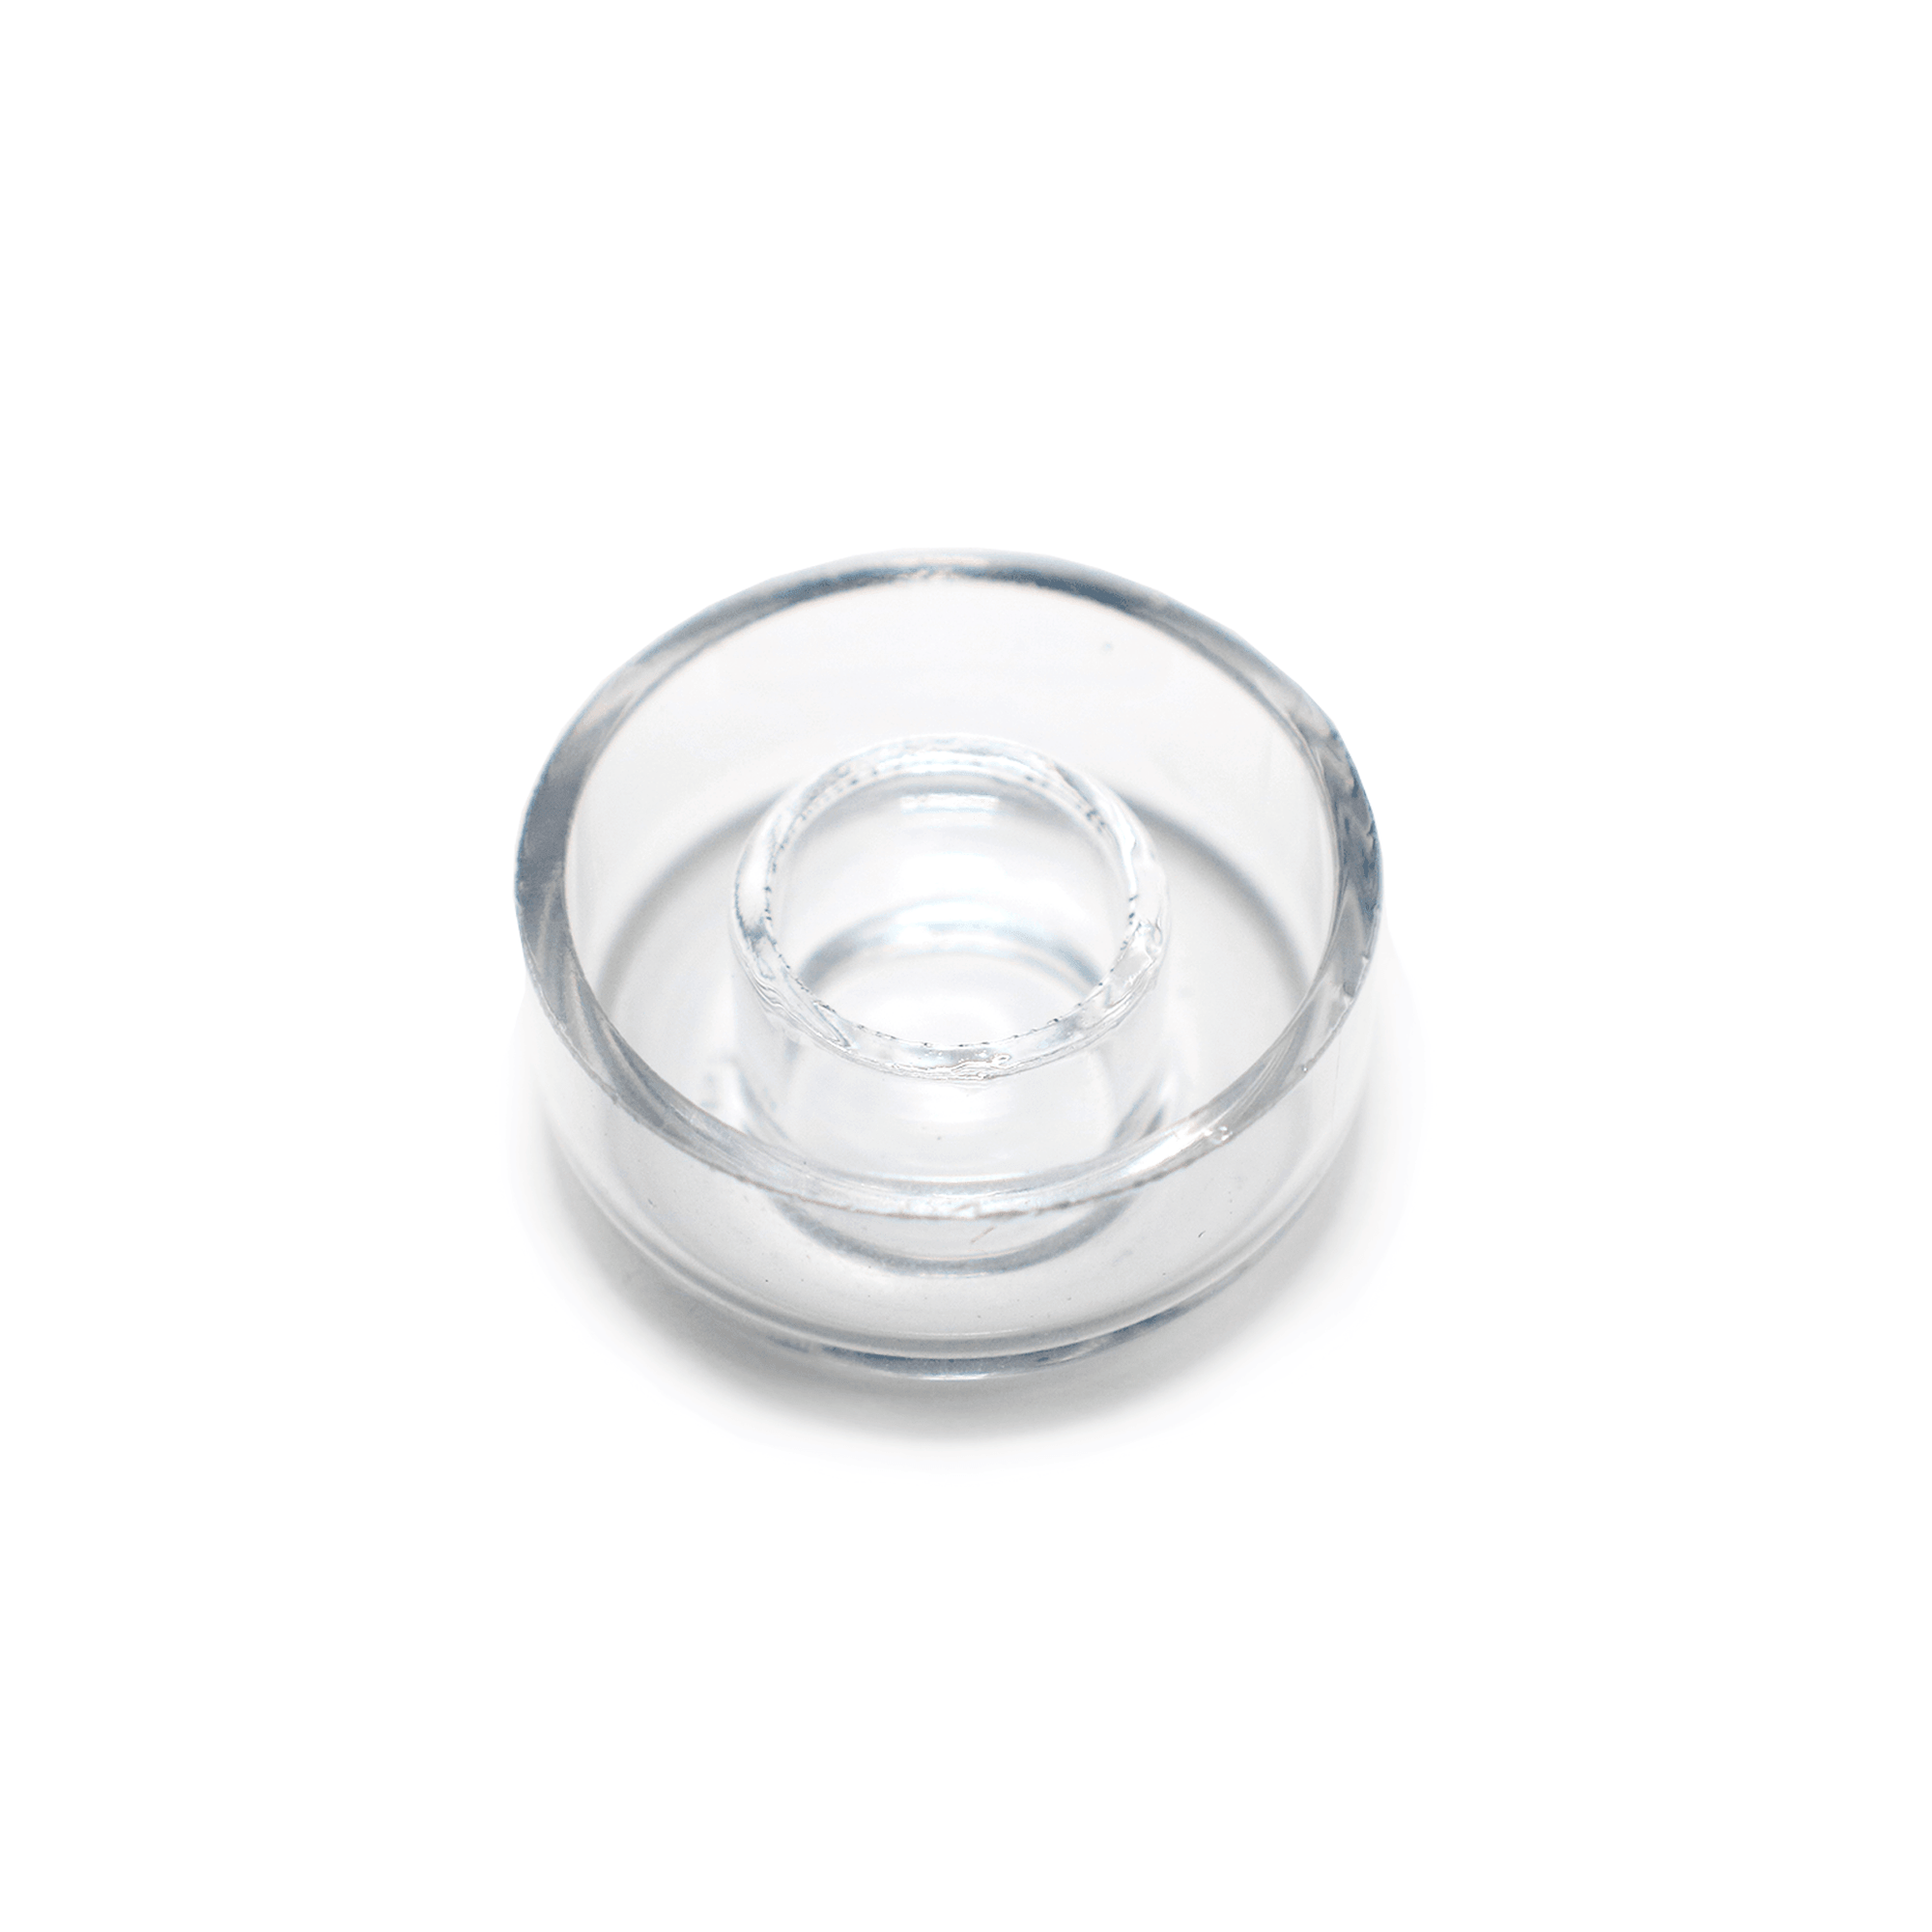 Dabbing Kit | Showerhead Bubbler and Hybrid Quartz Nail | Hybrid Quartz Nail Glass Dish View | TDS